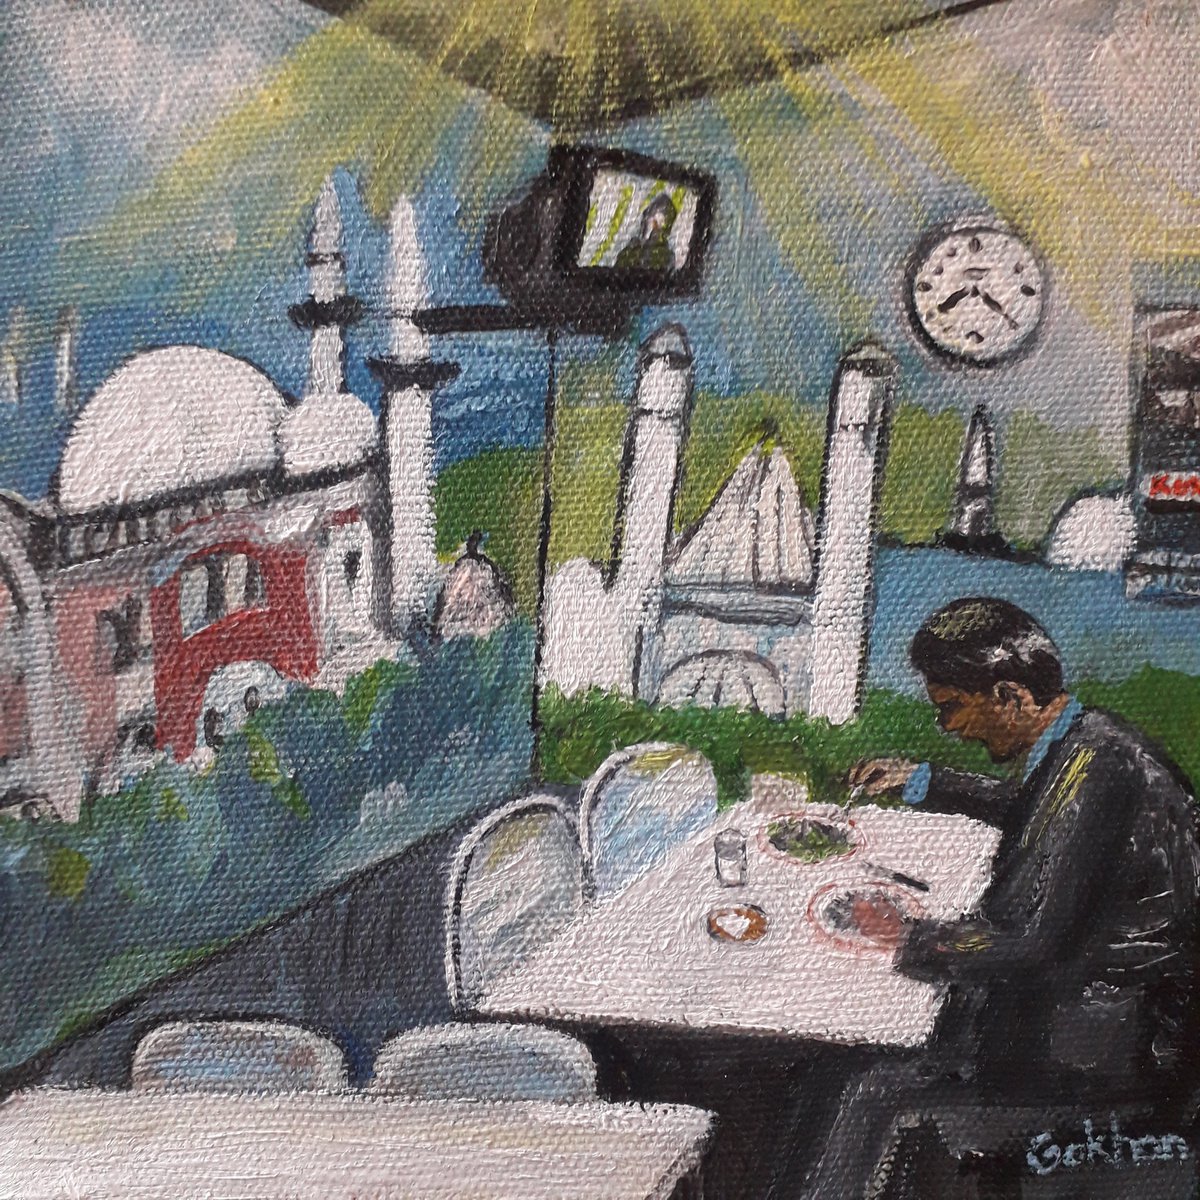 Alone in an Istanbul tavern by G.P Alpgiray